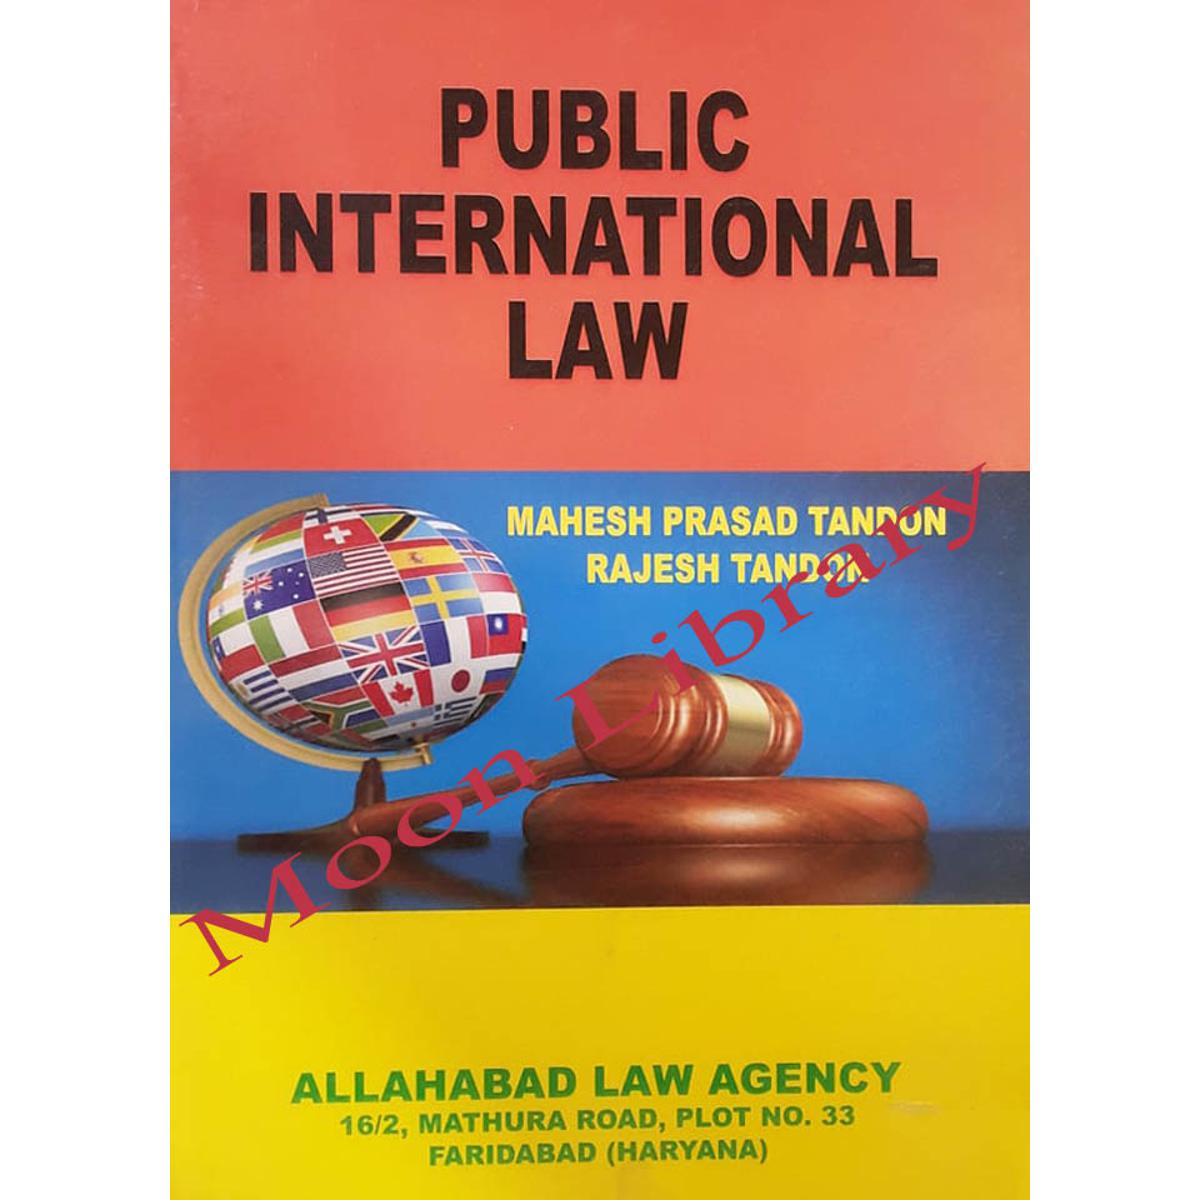 Public International Law by Mahesh Prasad Tandon & Rajesh Tandon